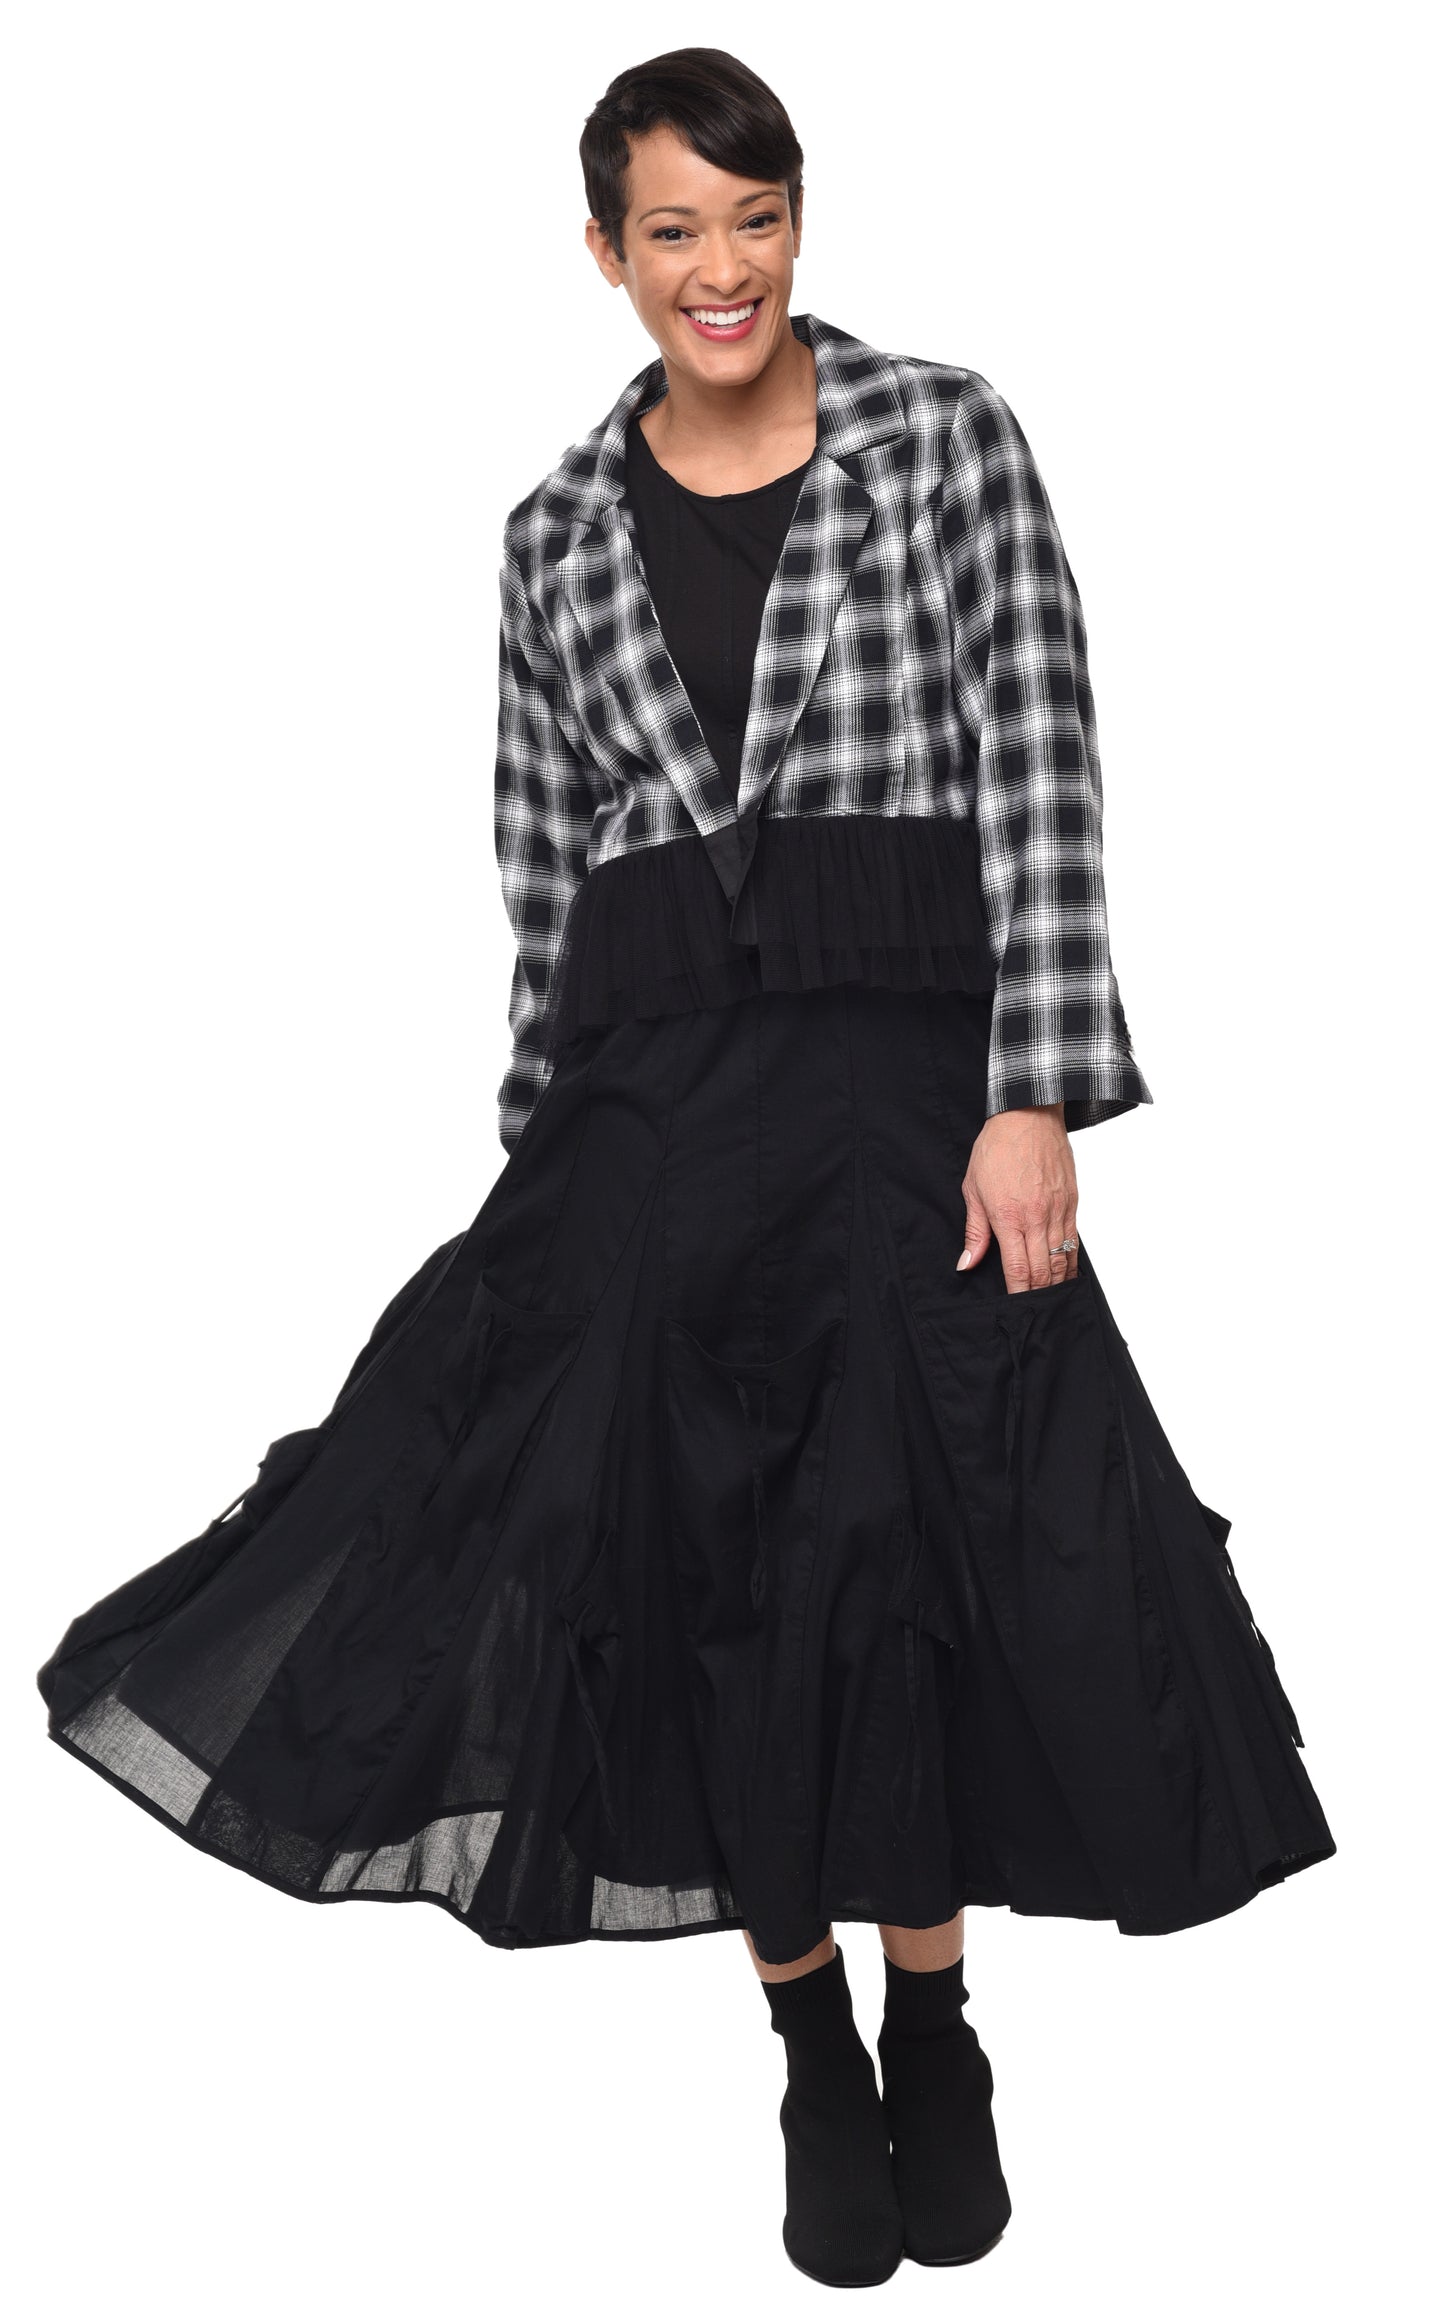 CV101 Alexus Skirt in Black